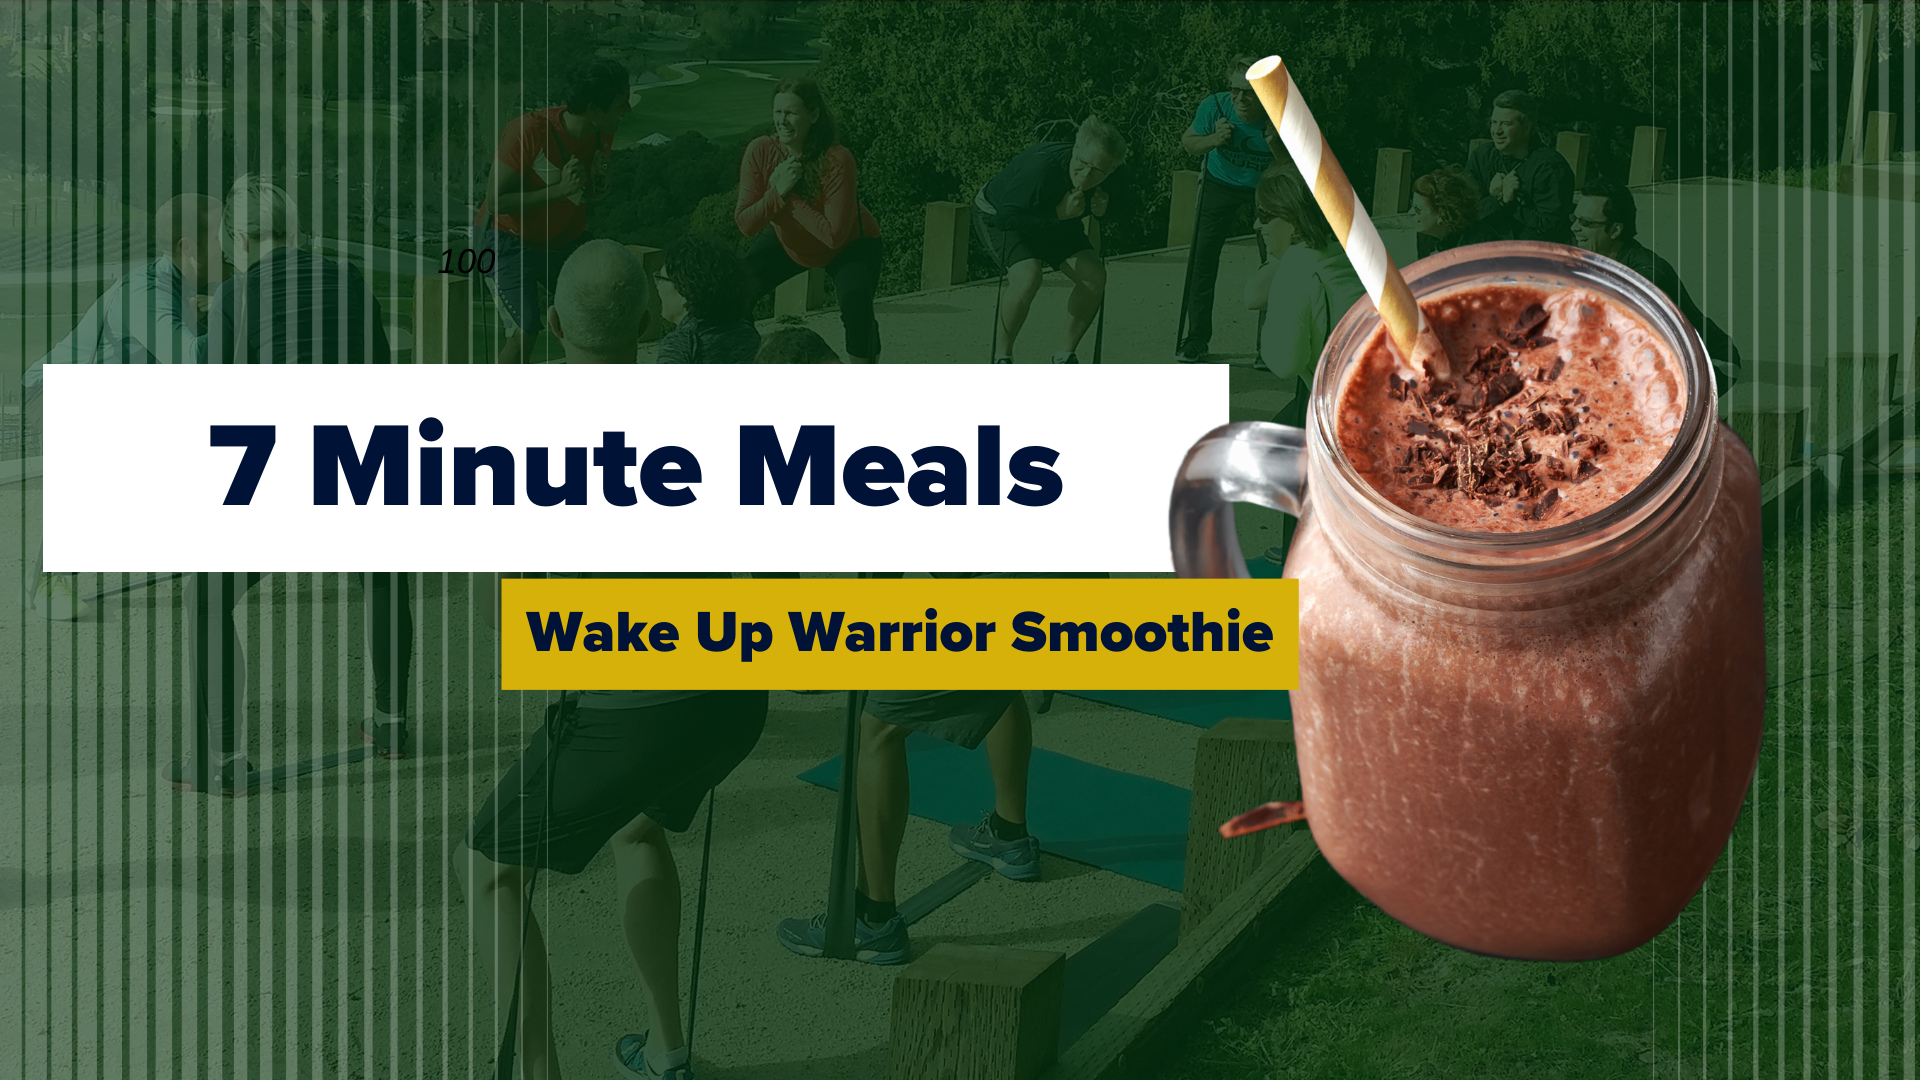 7 Minute Meals: Wake Up Warrior Smoothie